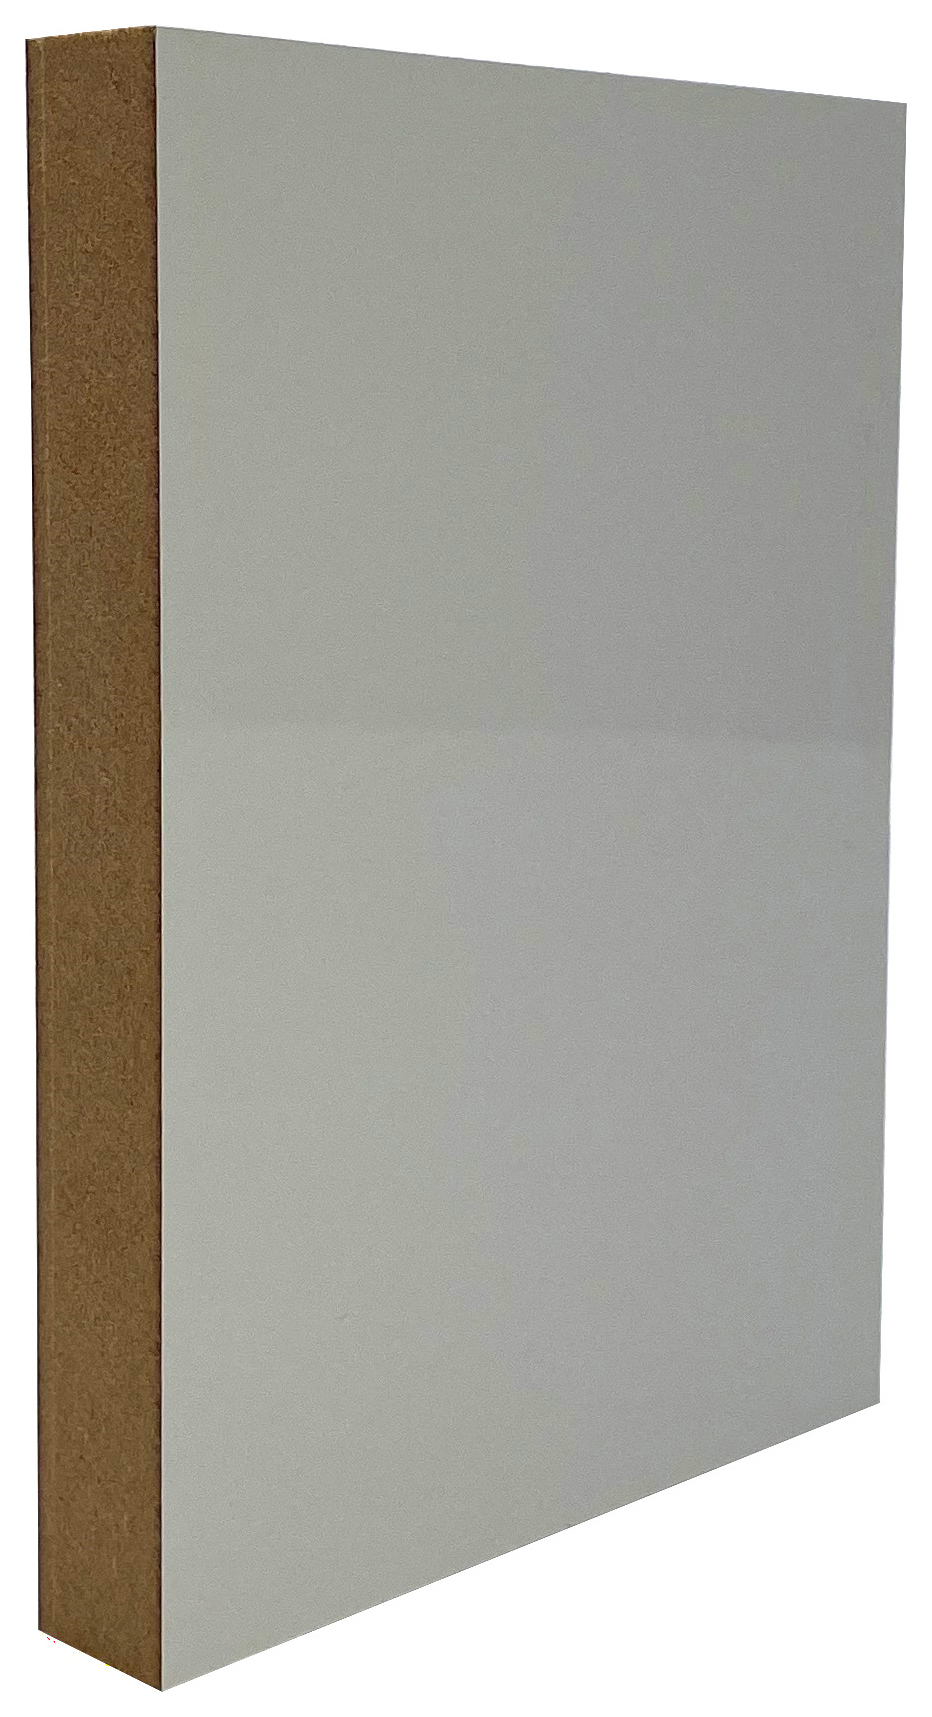 Image of Wickes Orlando/Madison Gloss Grey Colour Block Sample - 148mm x 105mm x 18mm